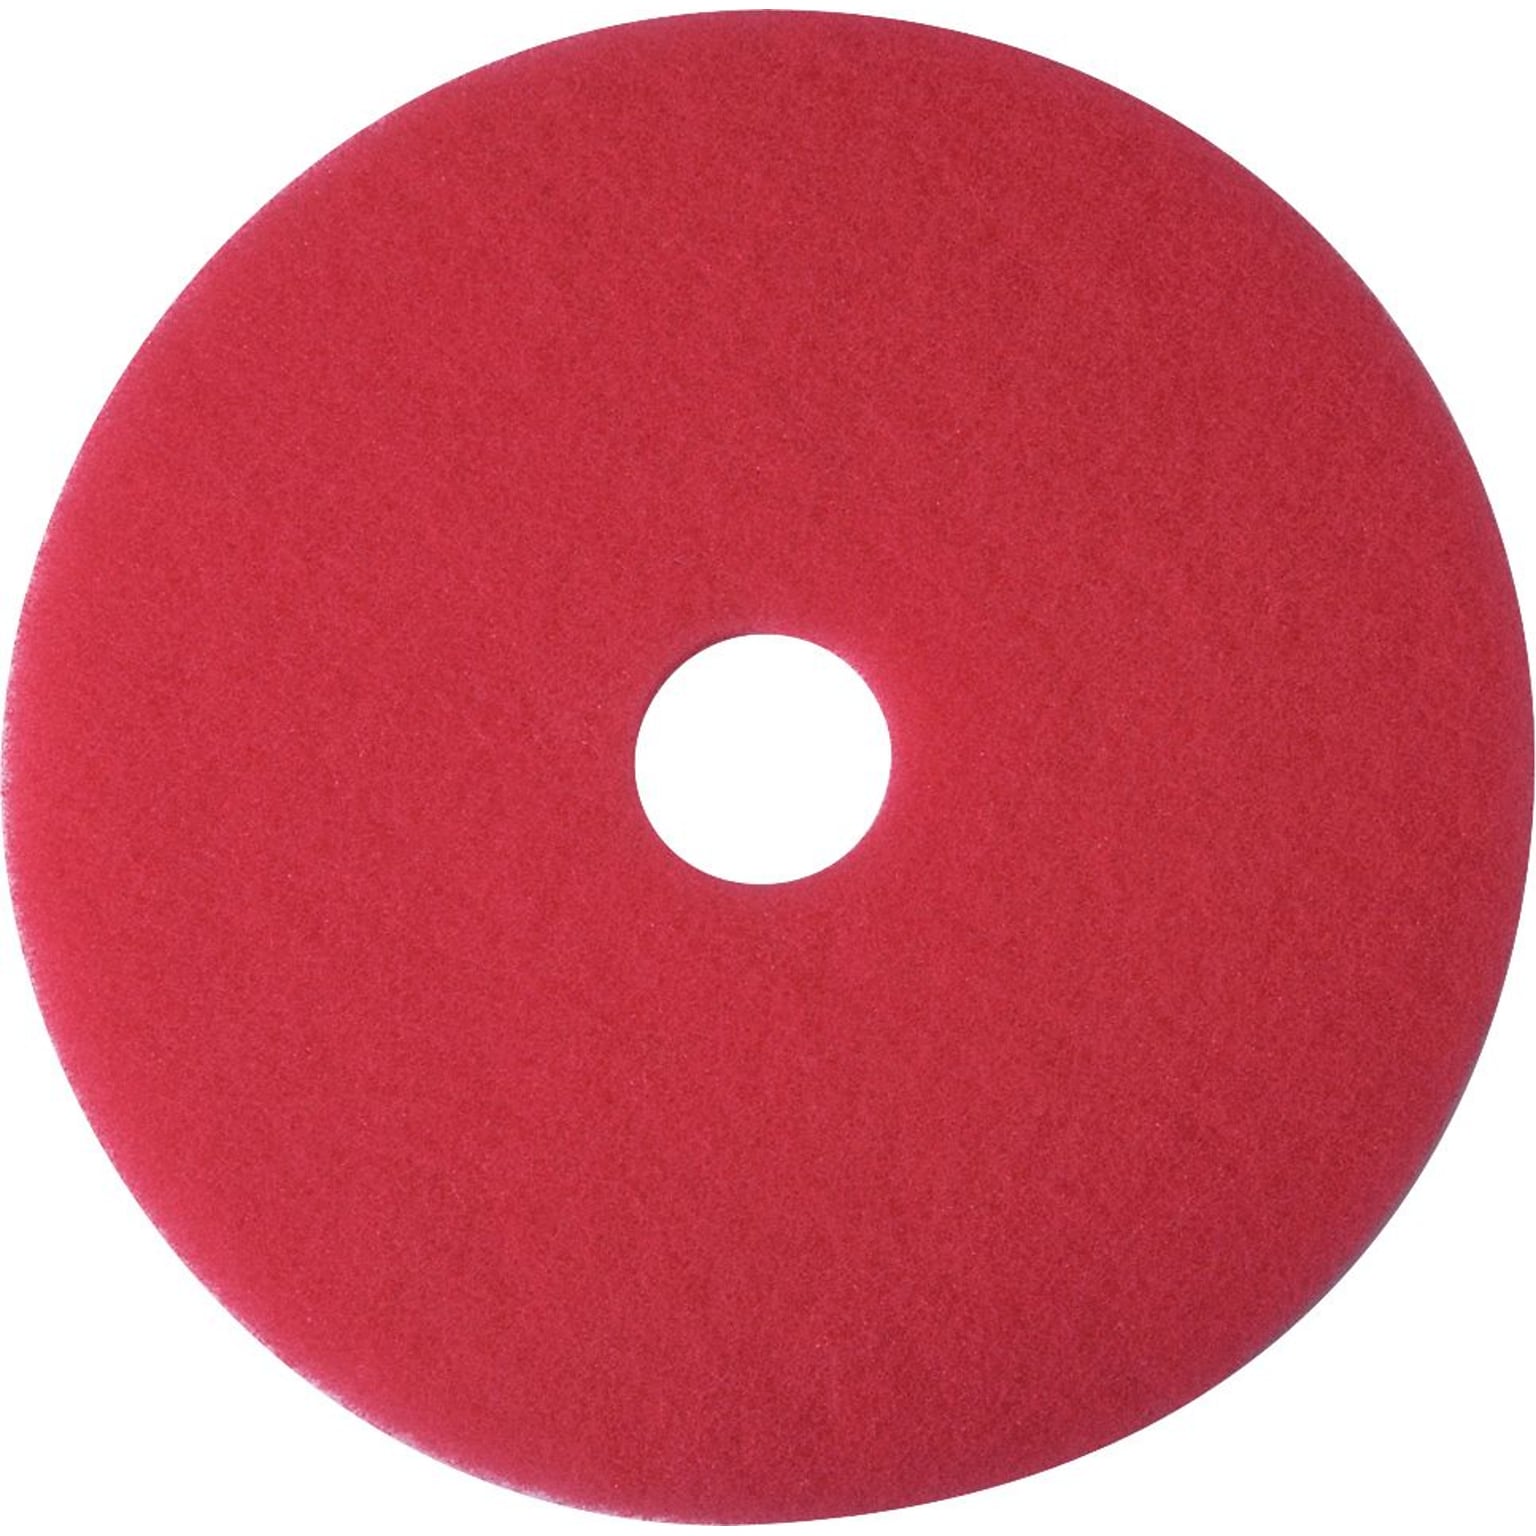 3M Red Buffer Pad, 20, 5/case (5100)